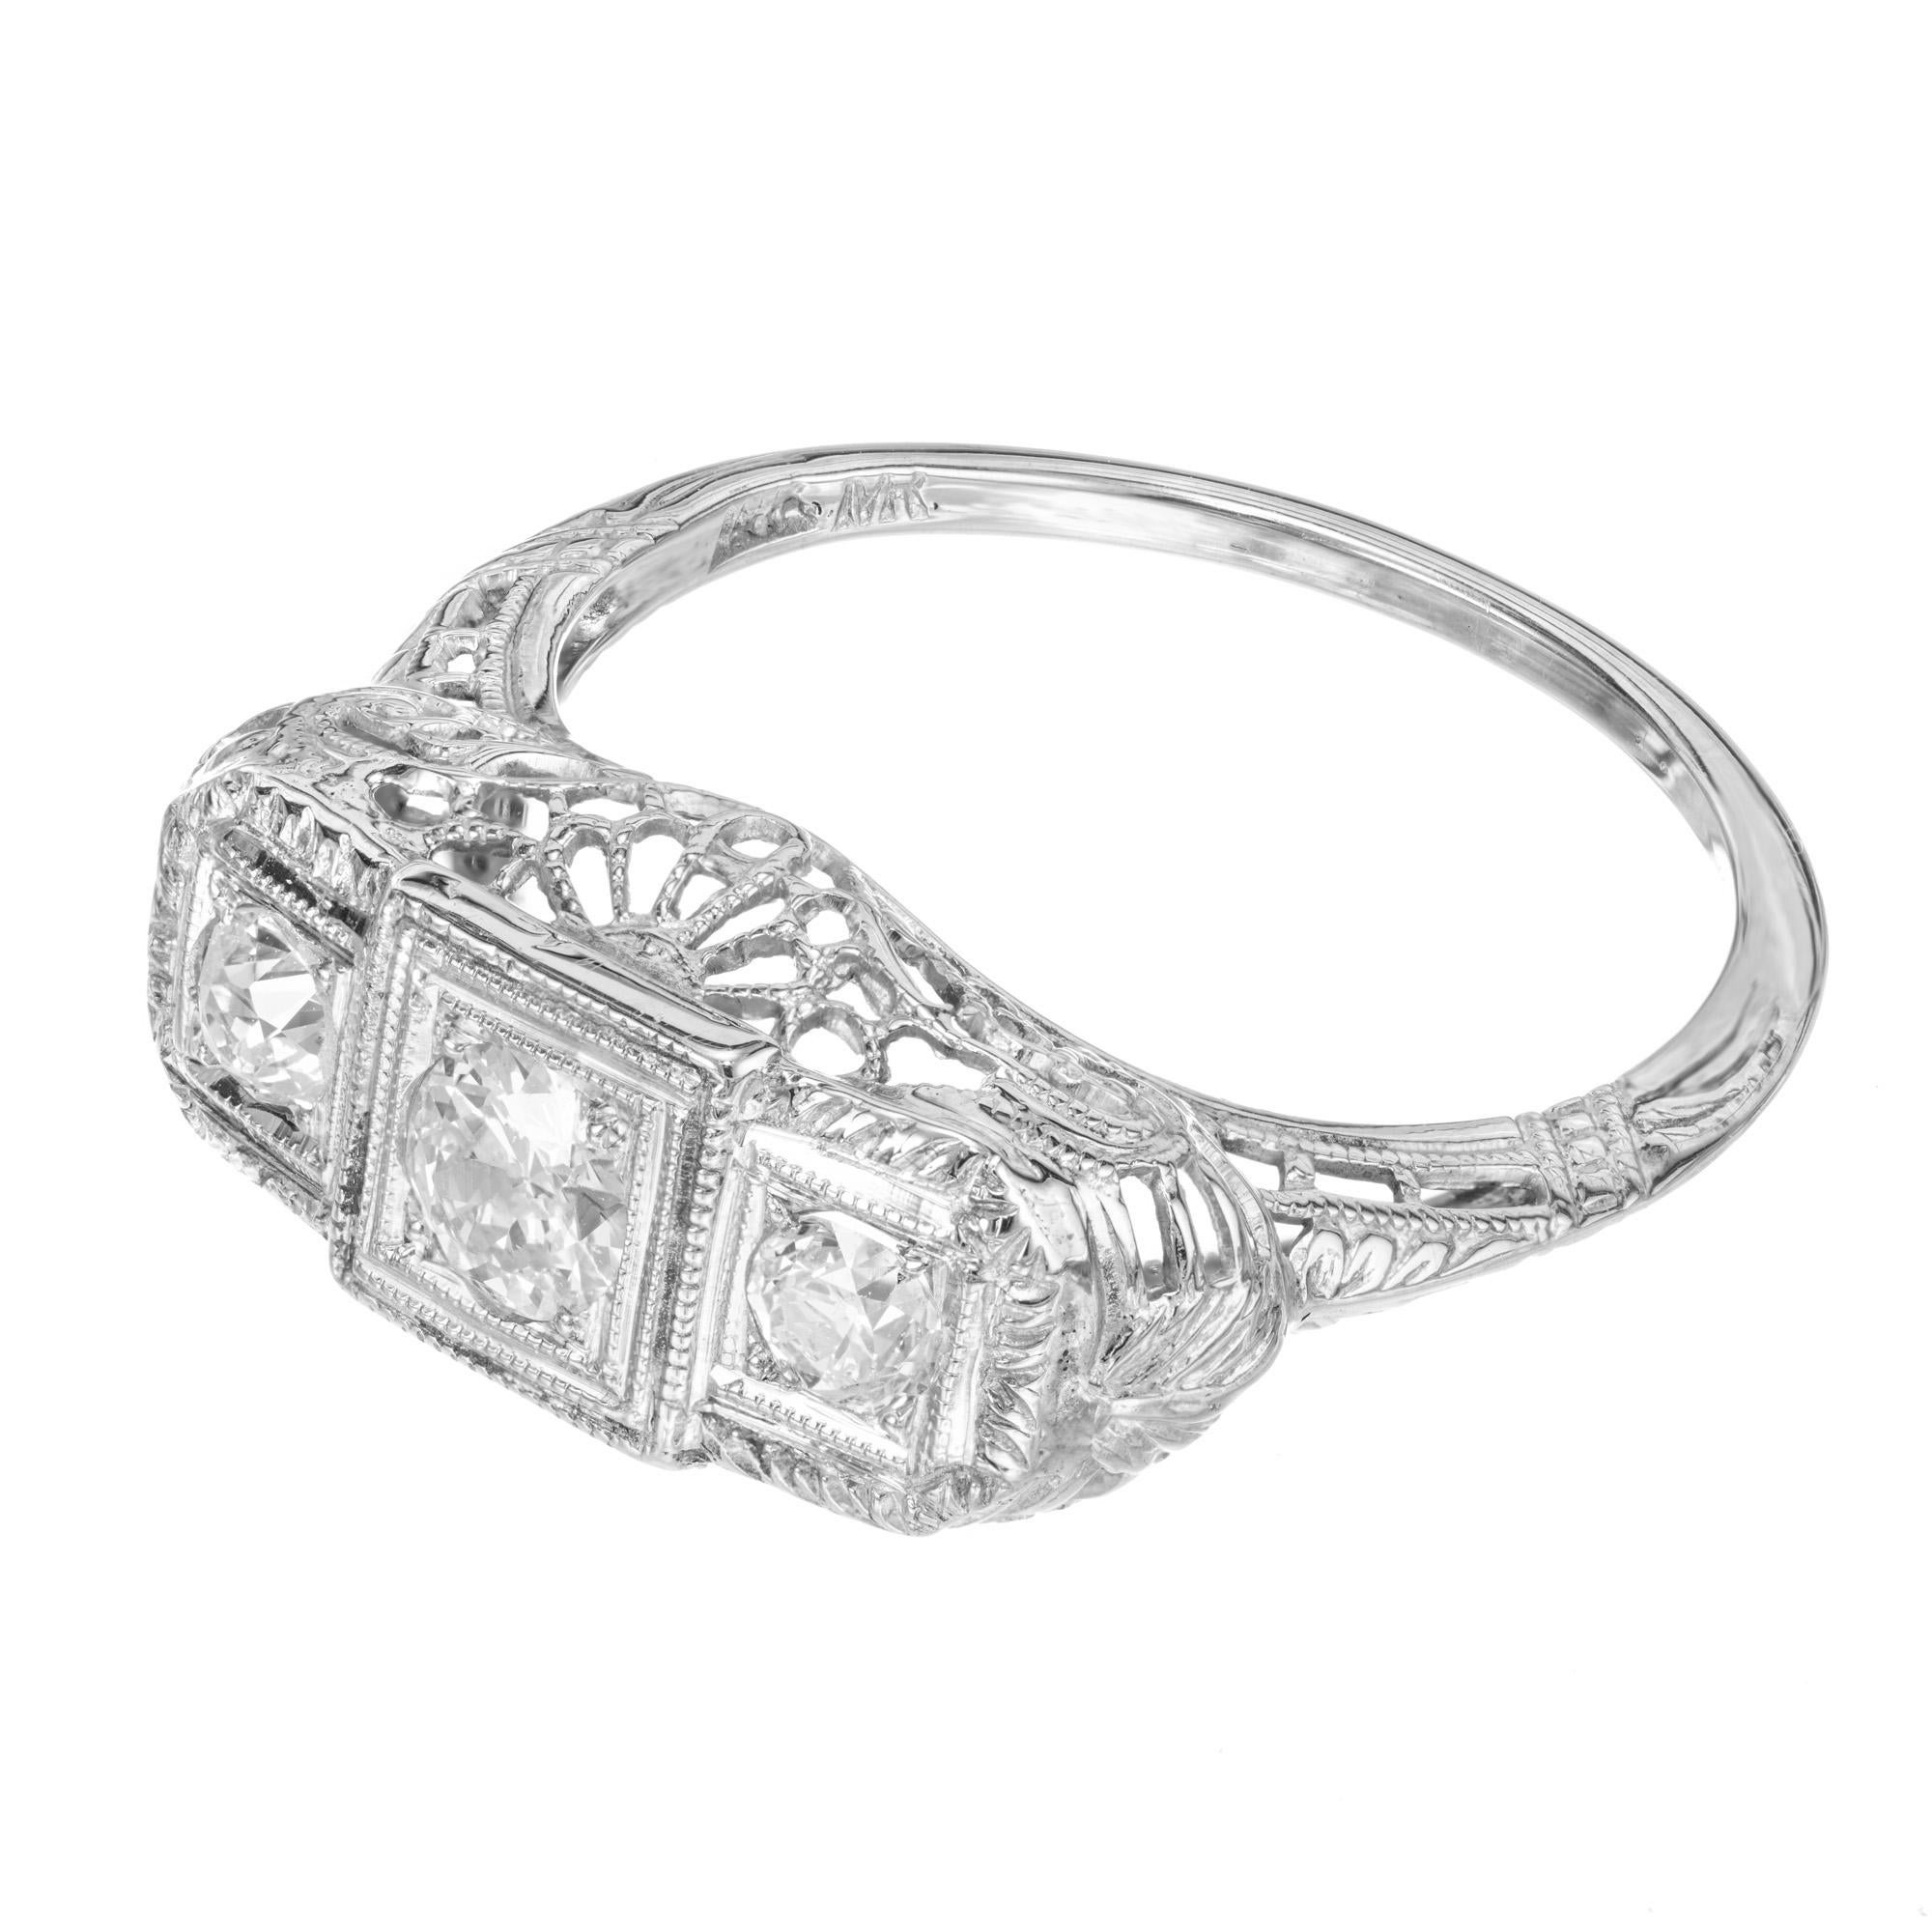 3 stone diamond ring designs